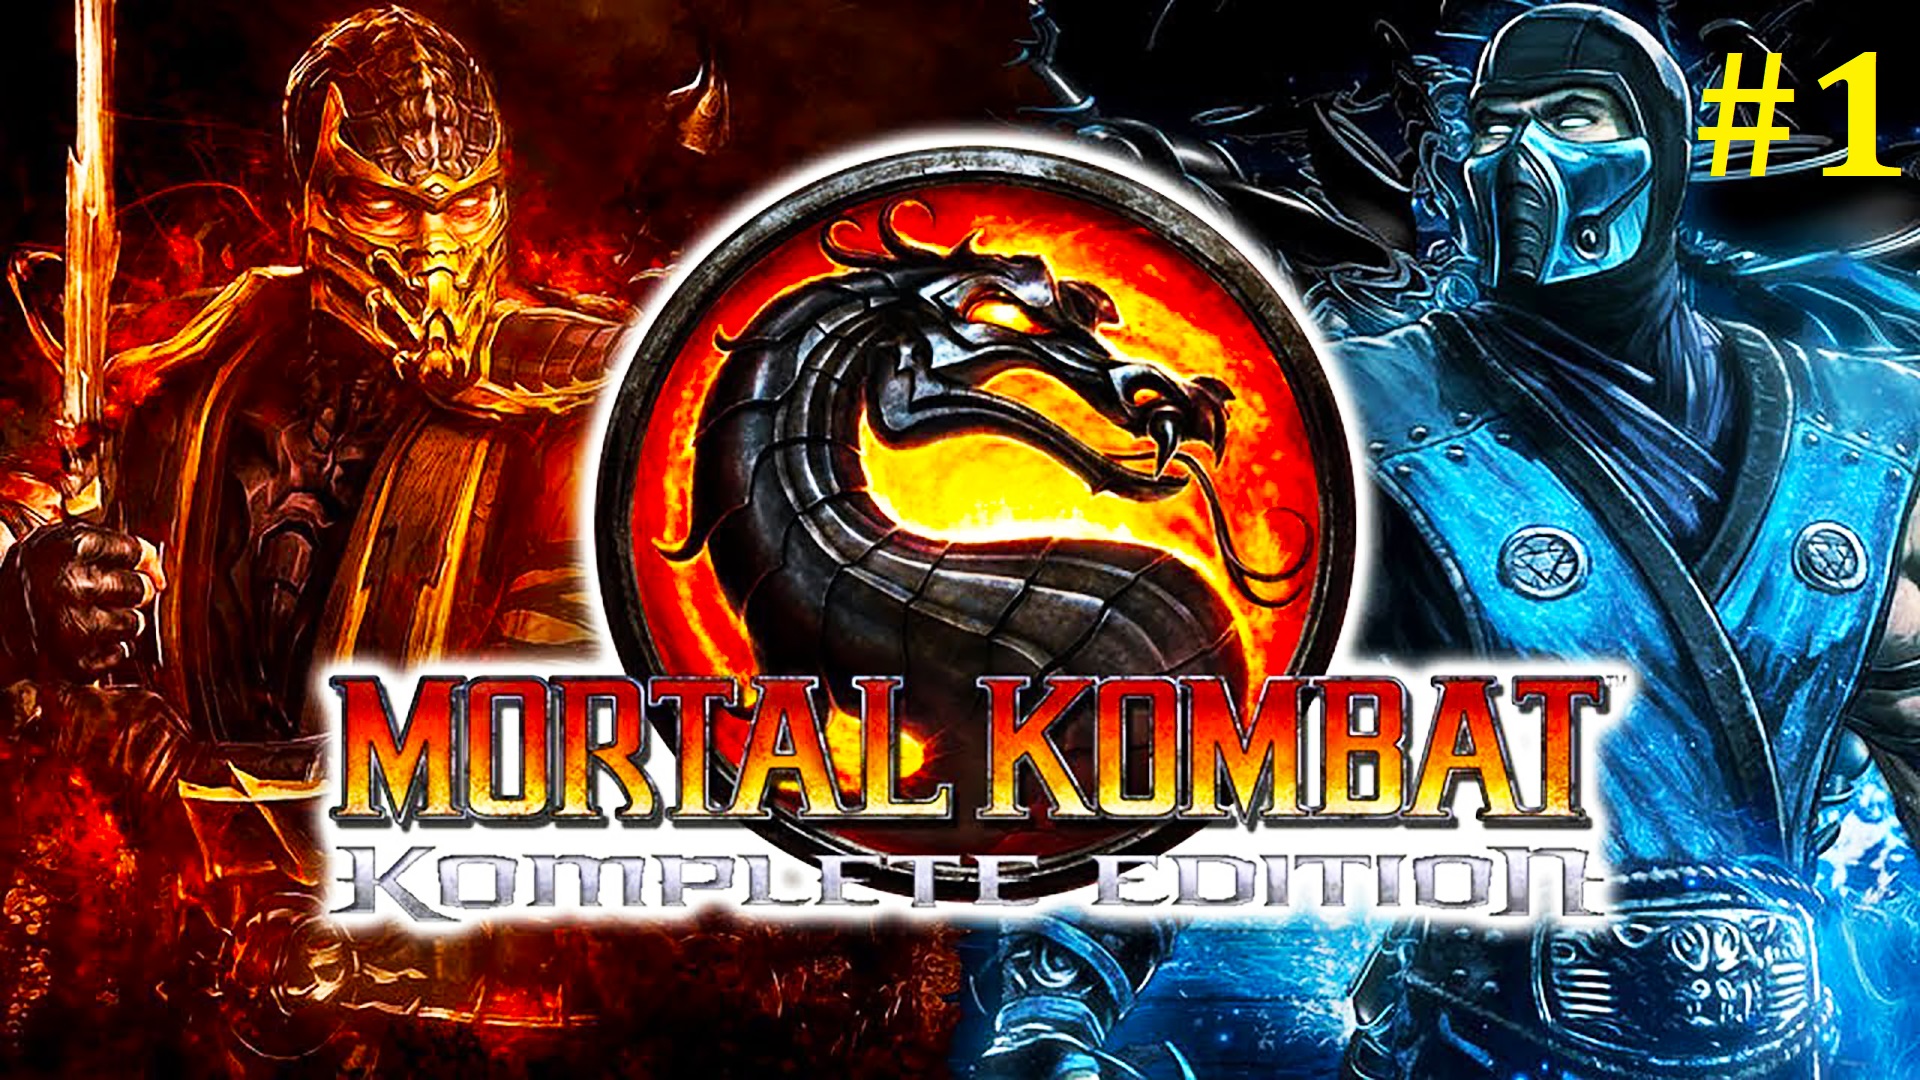 Мортал комбат 9 без торрента. Mk9 Komplete Edition. Мортал комбат 9. Mortal Kombat Komplete Edition. Mortal Kombat 9.Komplete Edition (2011).